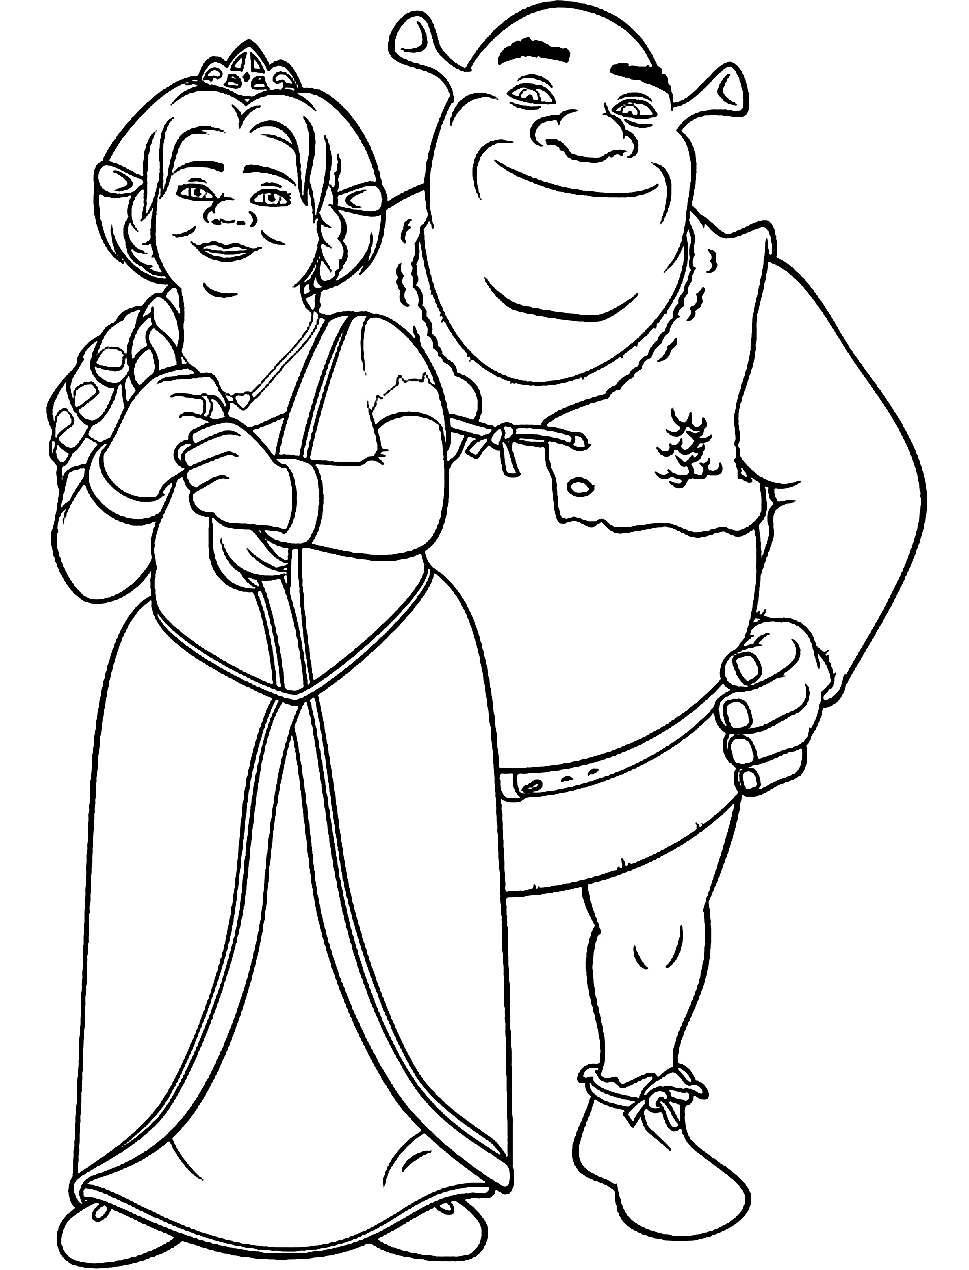 Fiona et Shrek sont heureux de Shrek